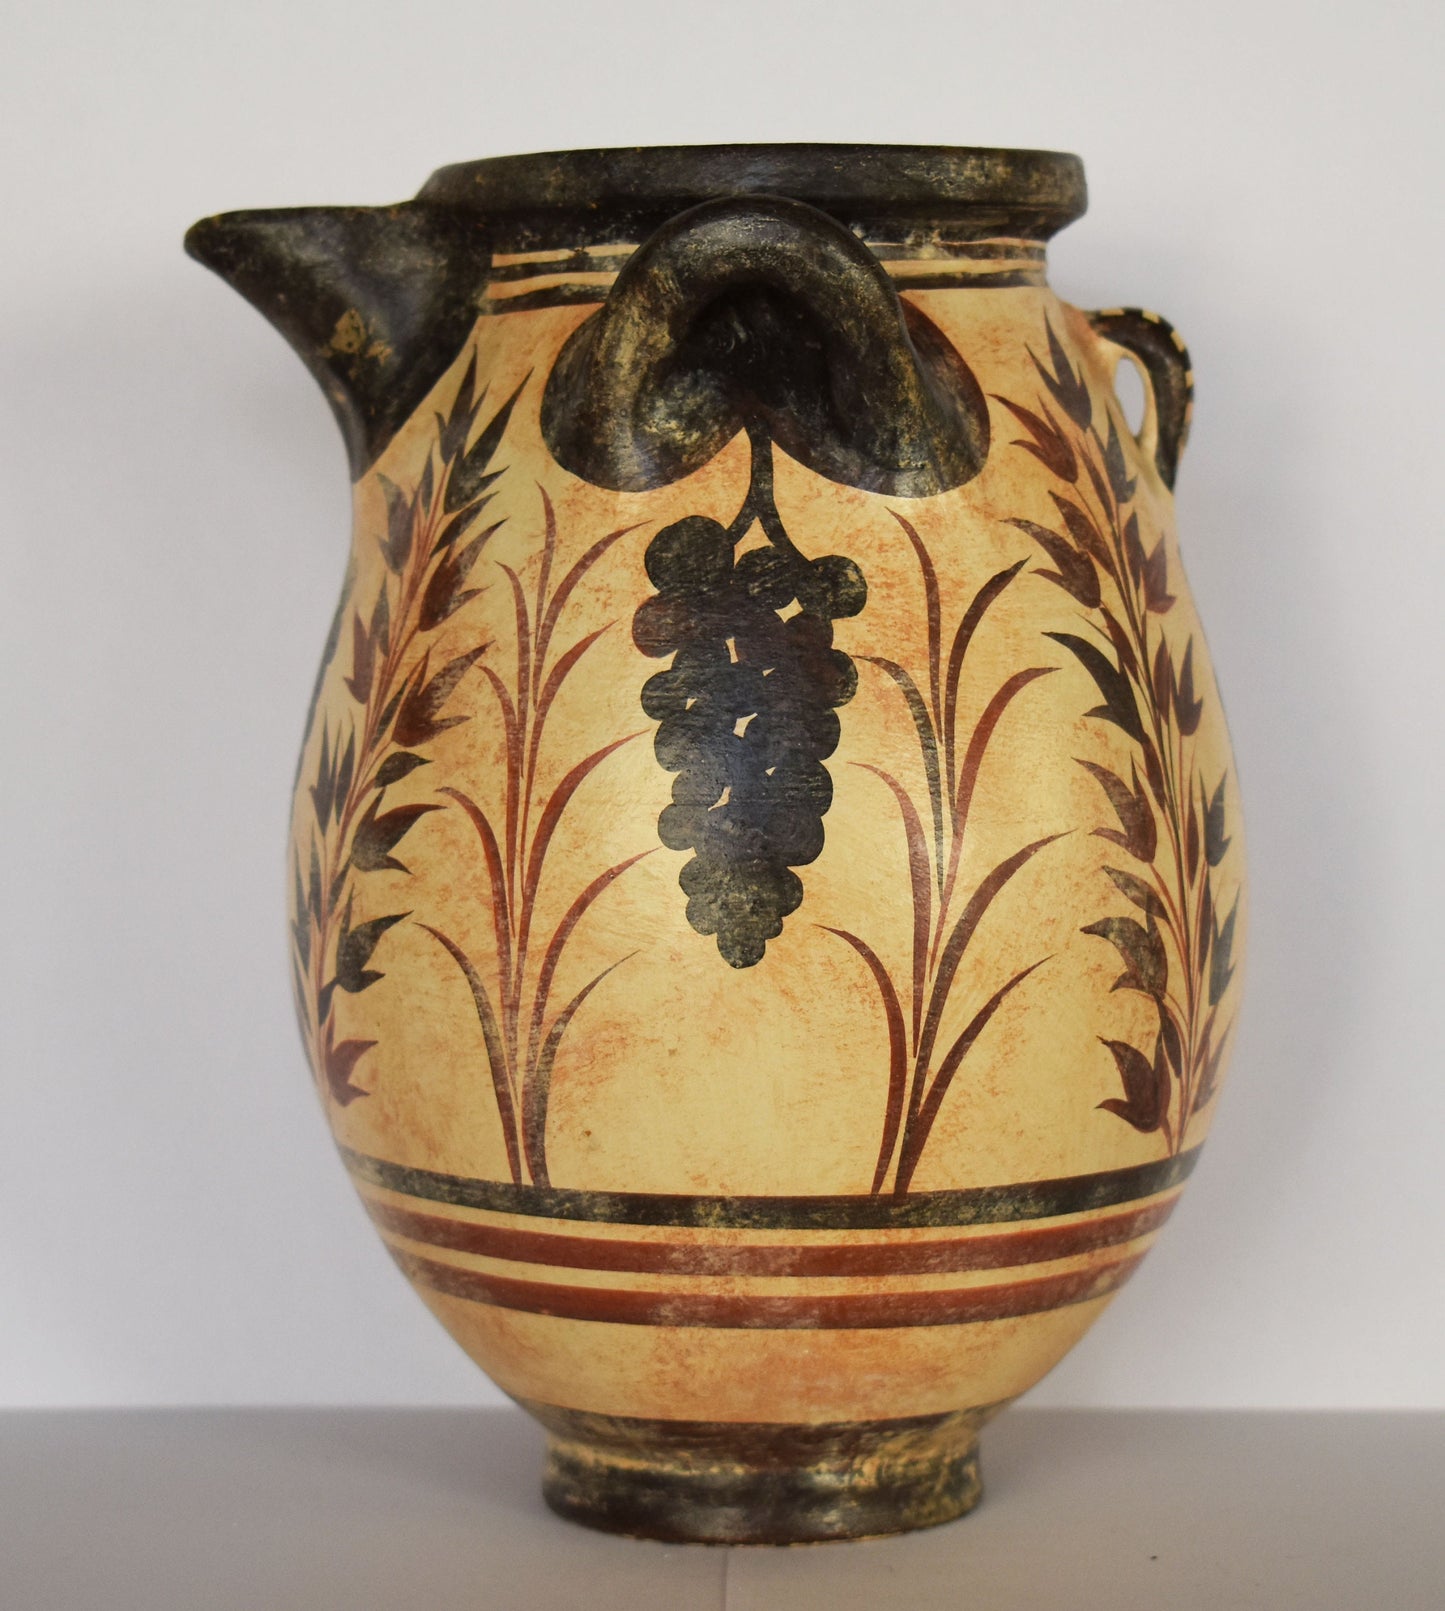 Vessel with Grapes and  Floral Design - Minoan - Akrotiri, Thera - 1700 BC - Ceramic Vase